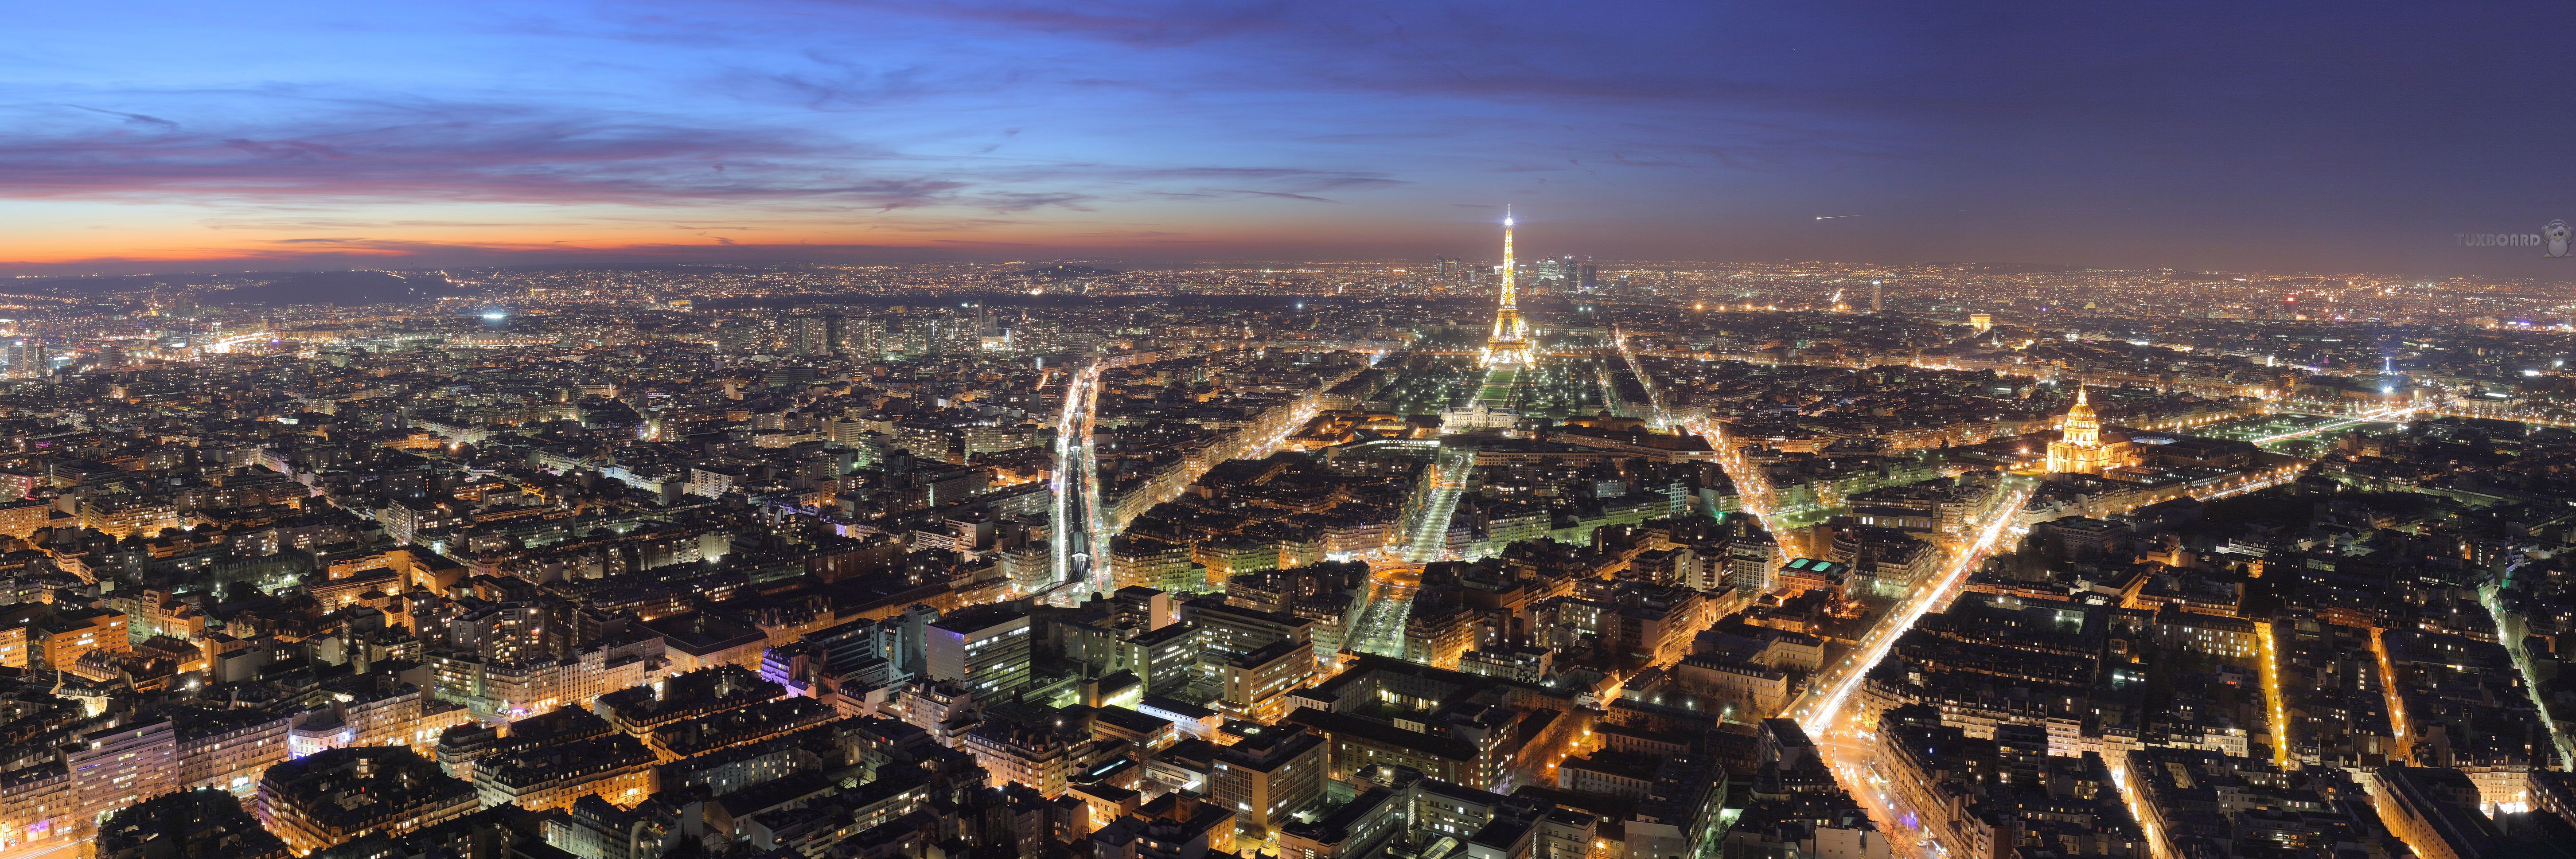 Panorama de Paris la nuit